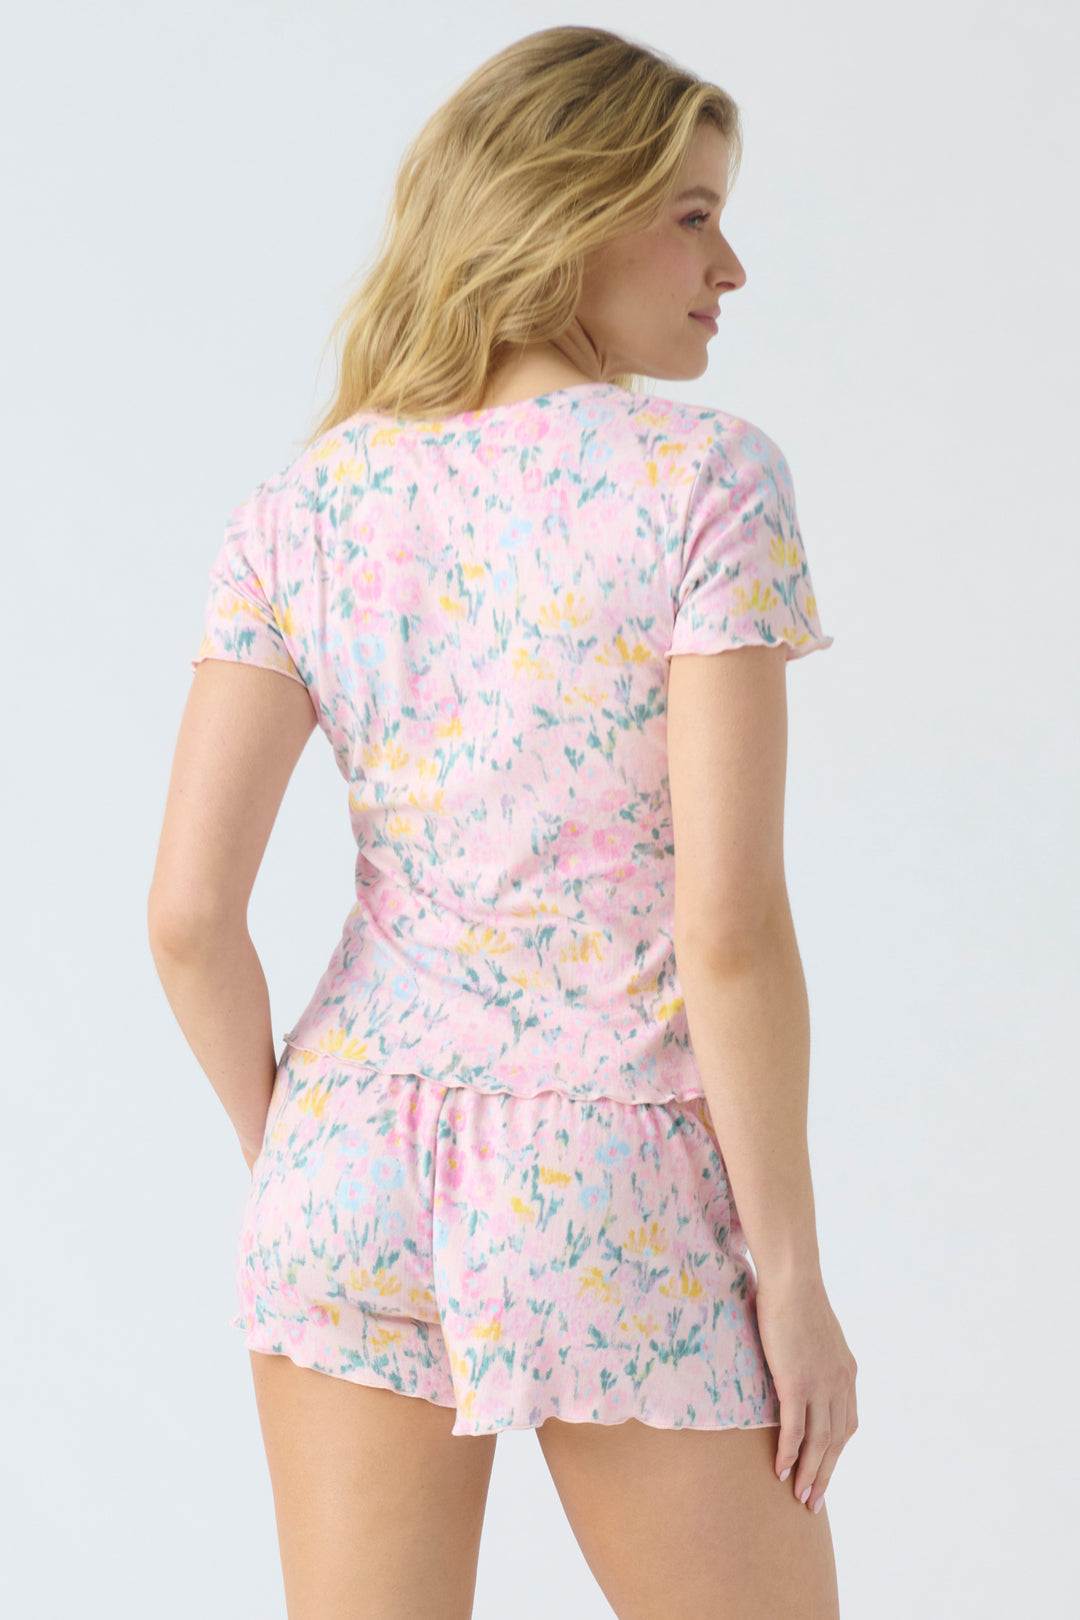 Women's pajama set in pink floral print pointelle. Short sleeve button top & pj short.